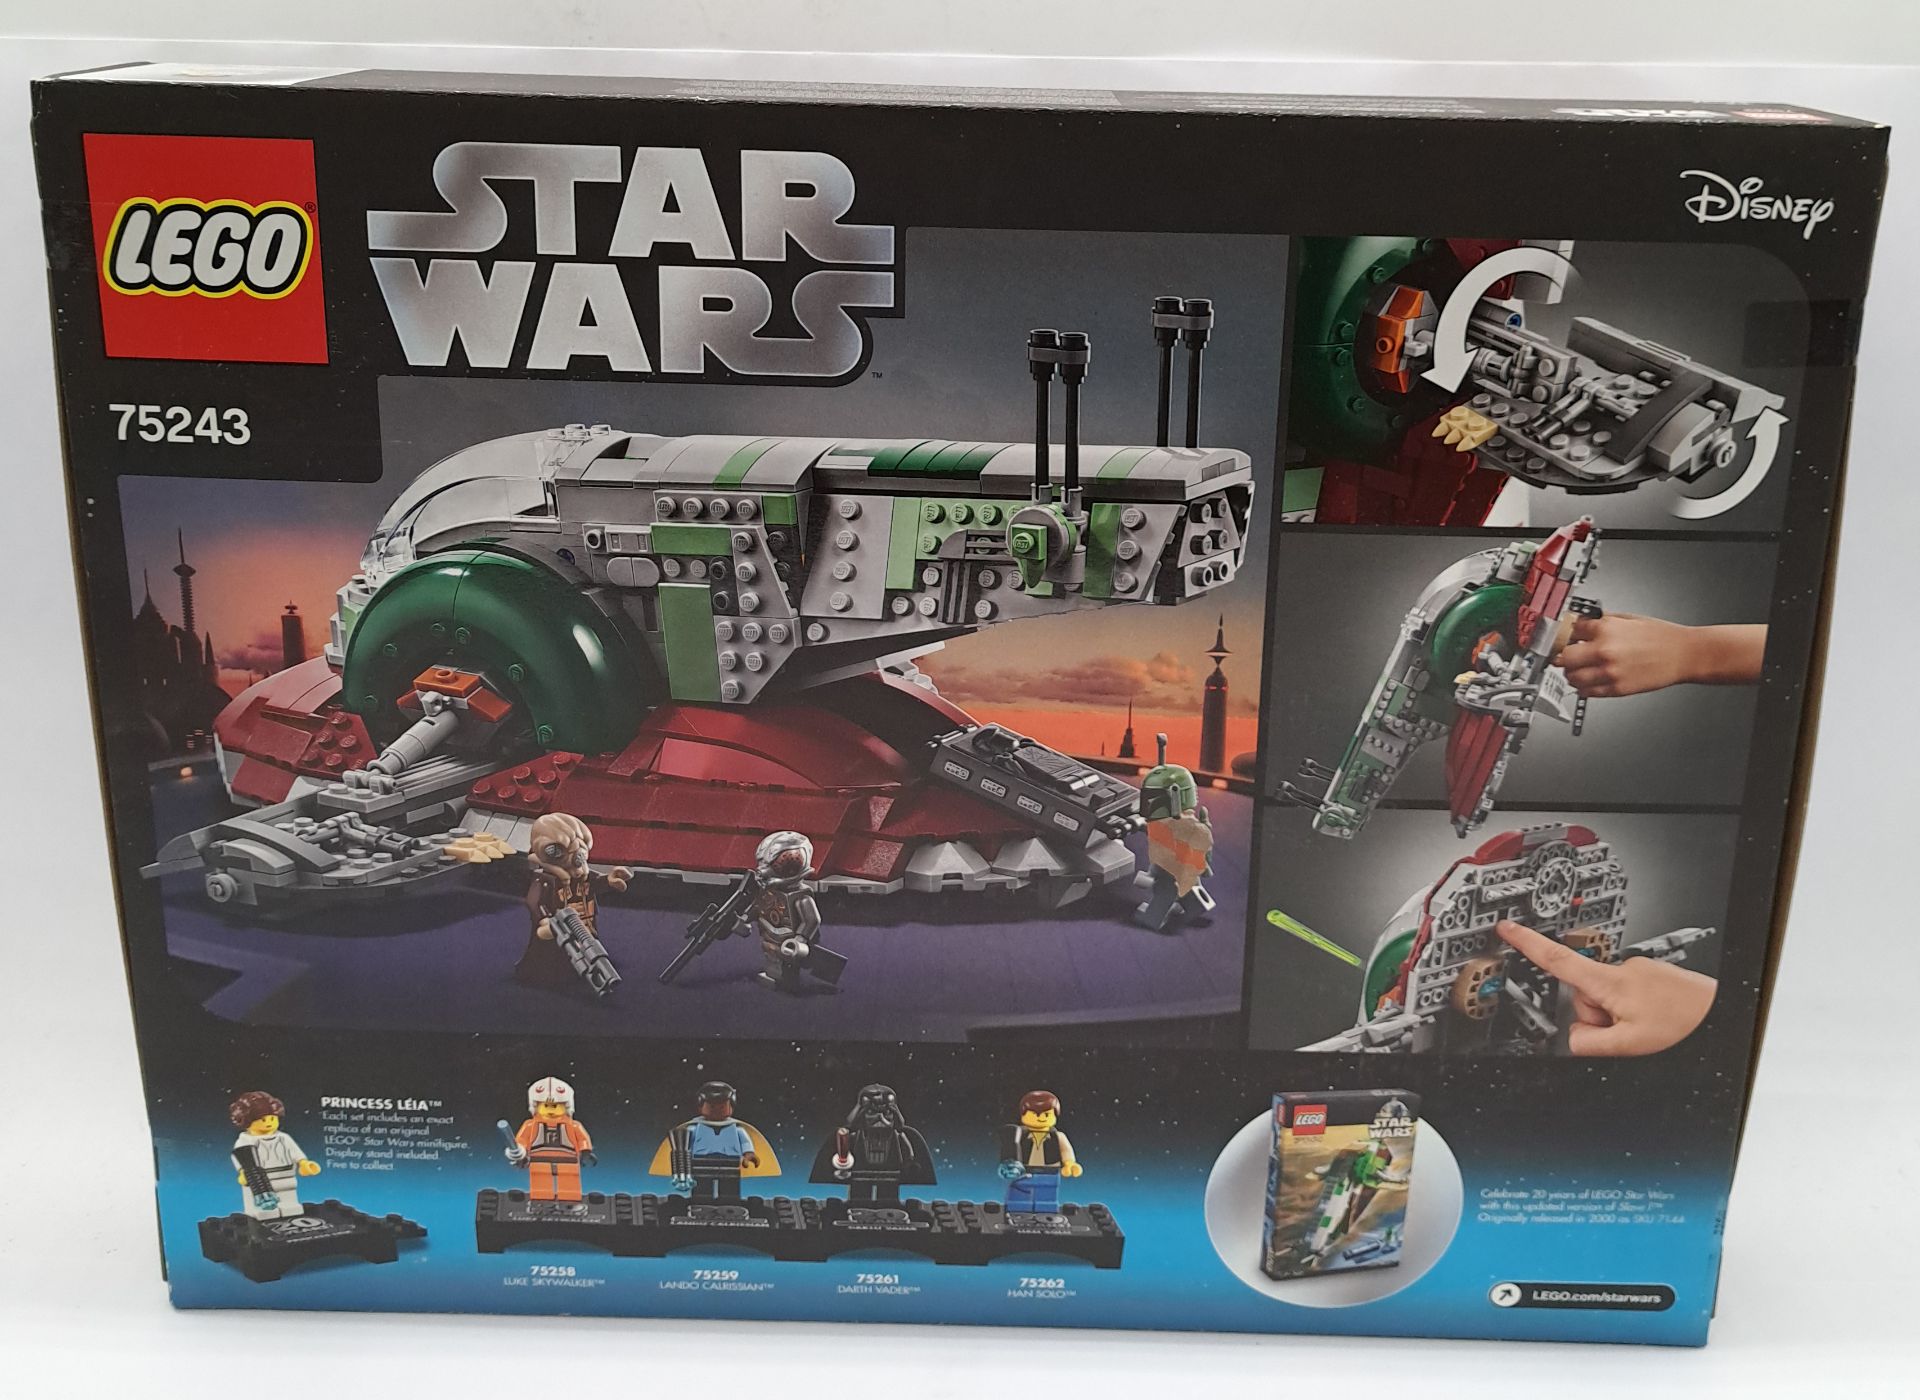 Lego Star Wars Slave I -20th Anniversary Edition Set 75243 - Image 2 of 2